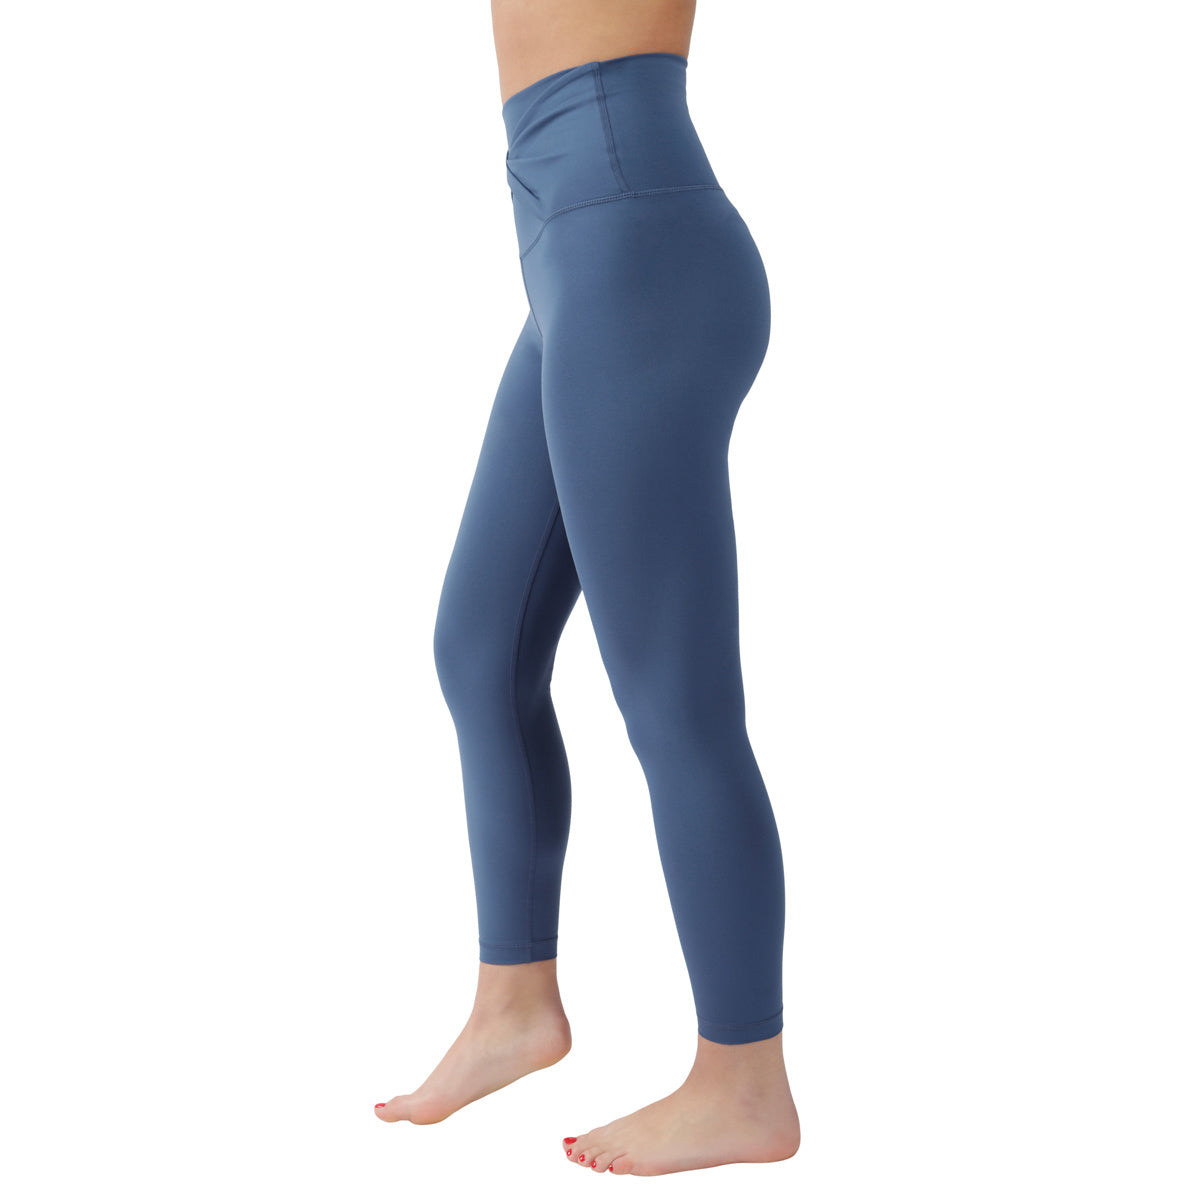 Yogalicious High Rise Squat Proof Criss Cross Yoga Pants for Women